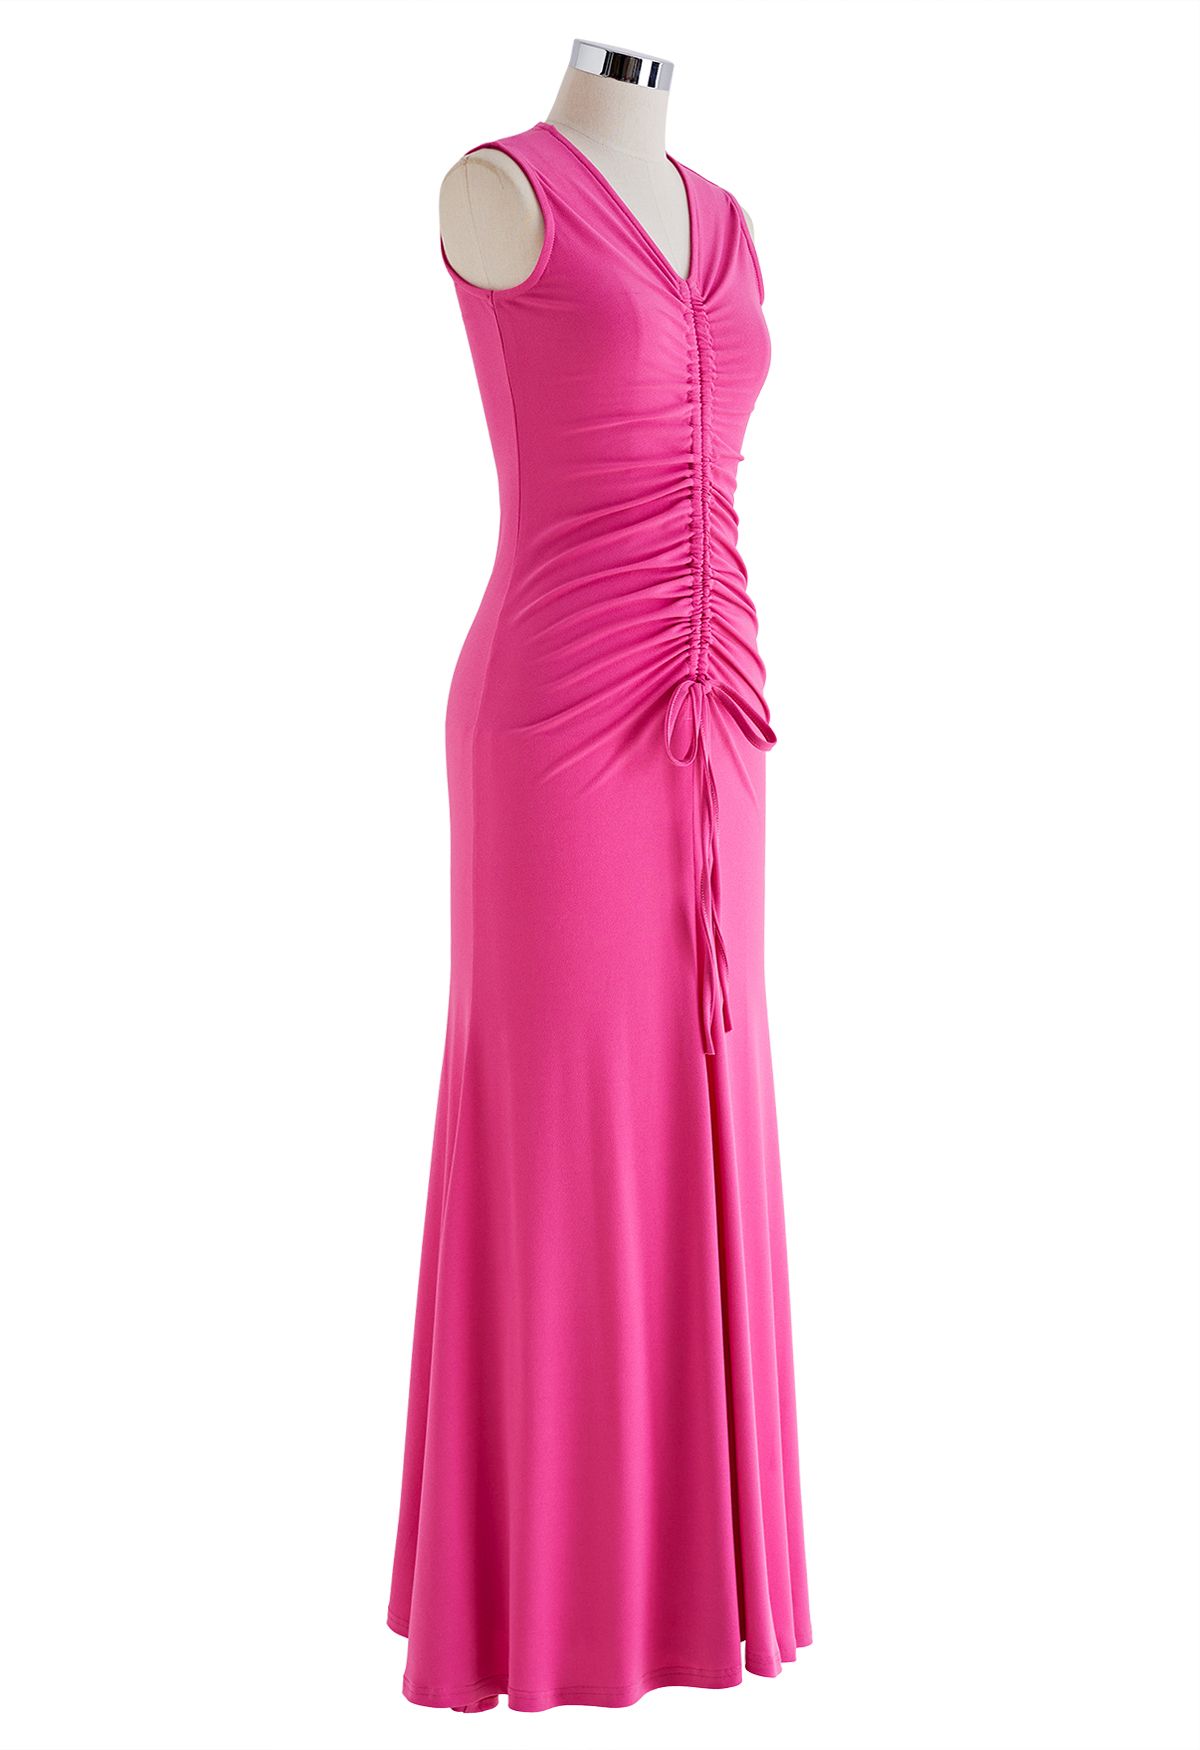 V-Neck Drawstring Ruched Sleeveless Dress in Hot Pink